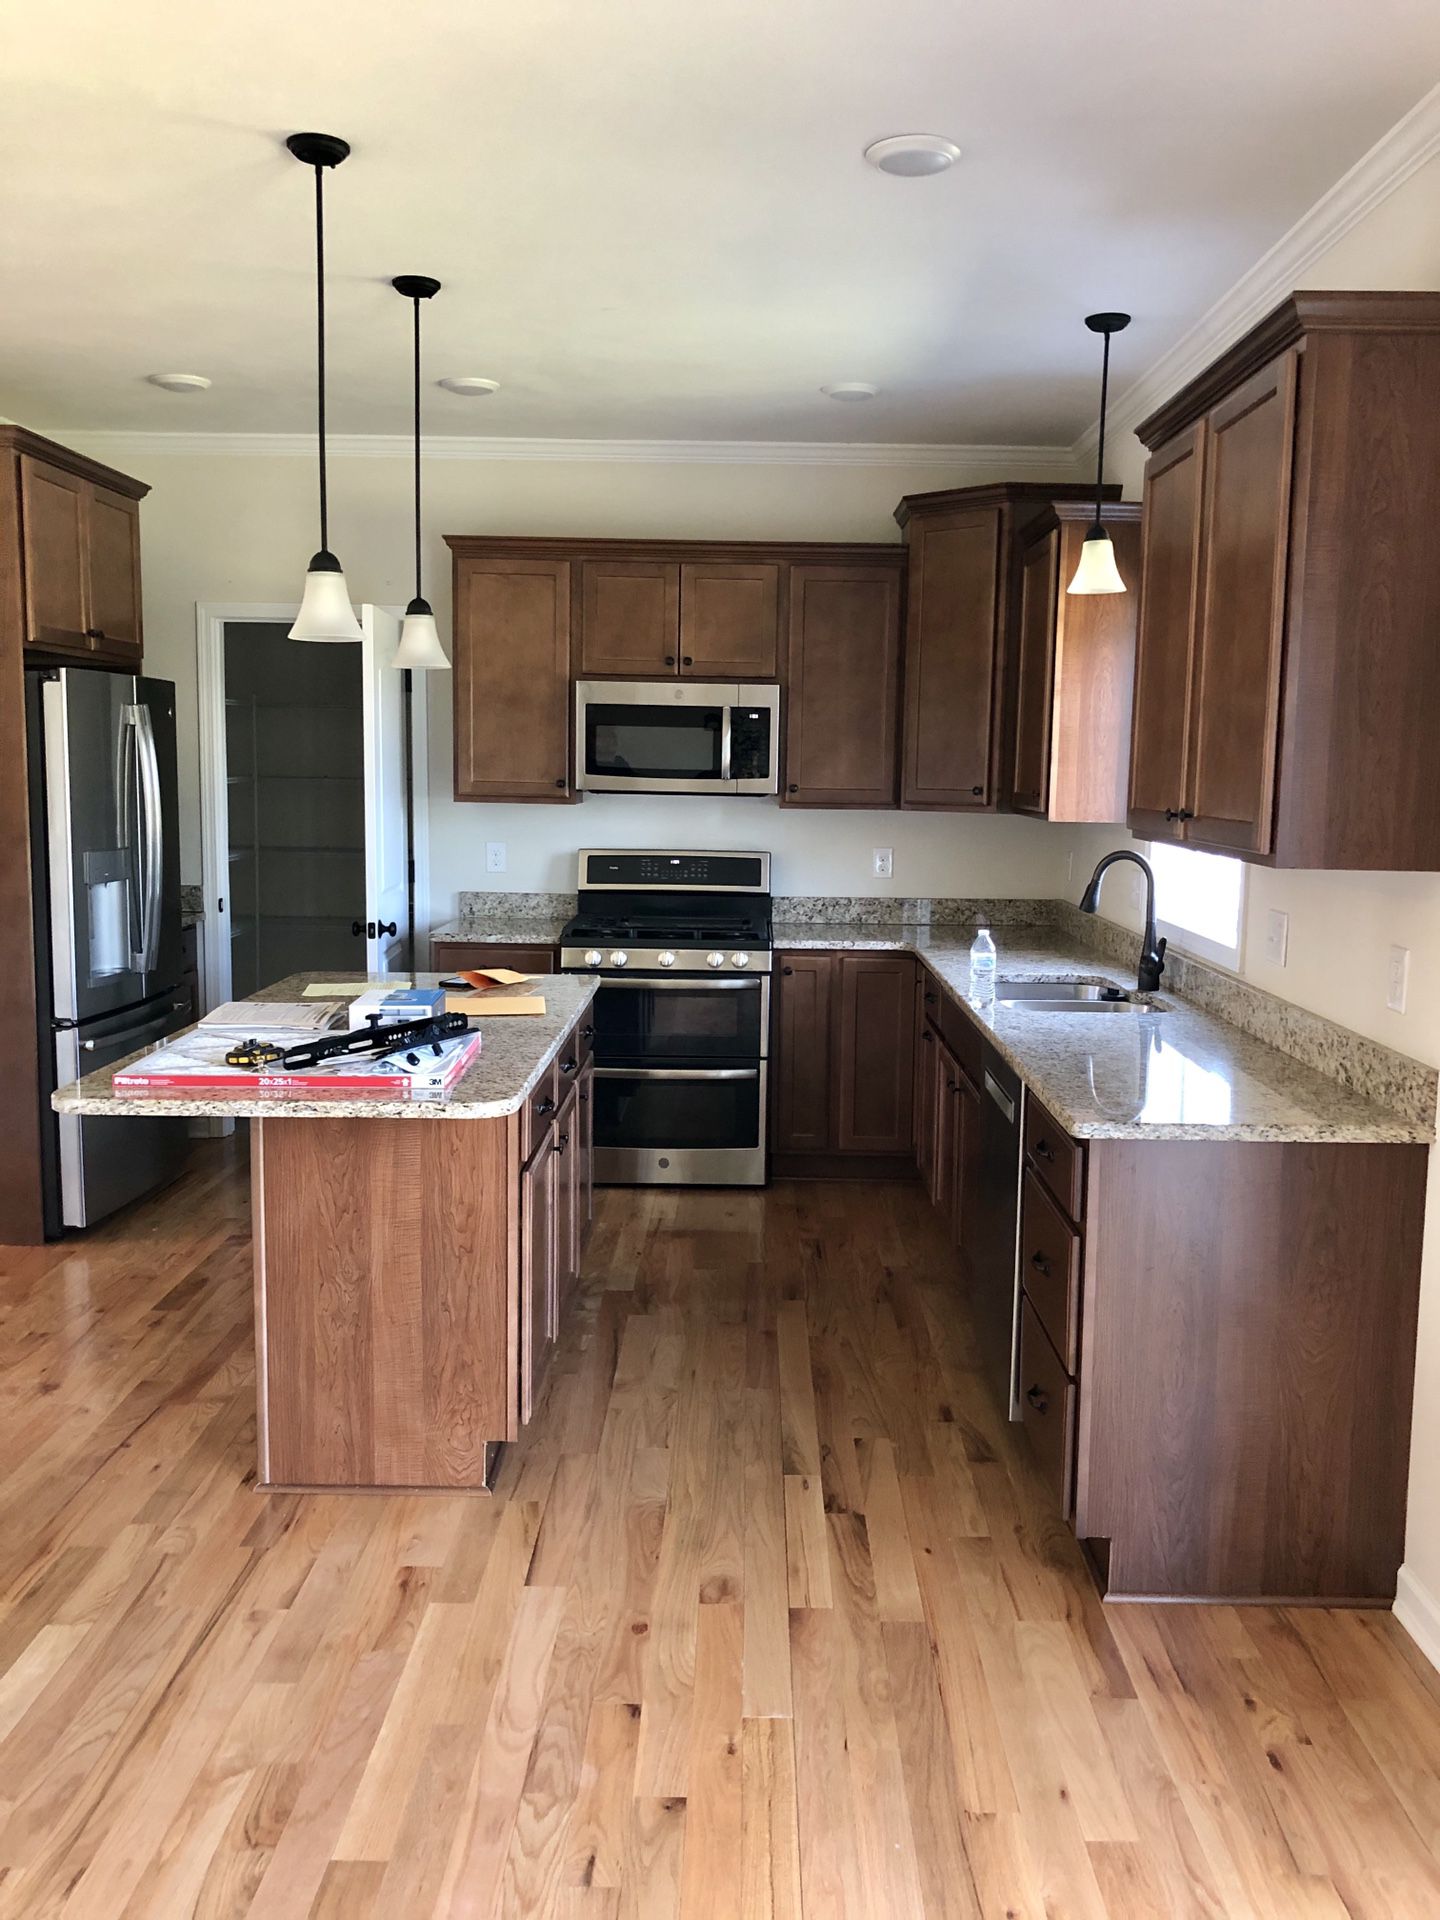 Kitchen cabinets and granite countertop